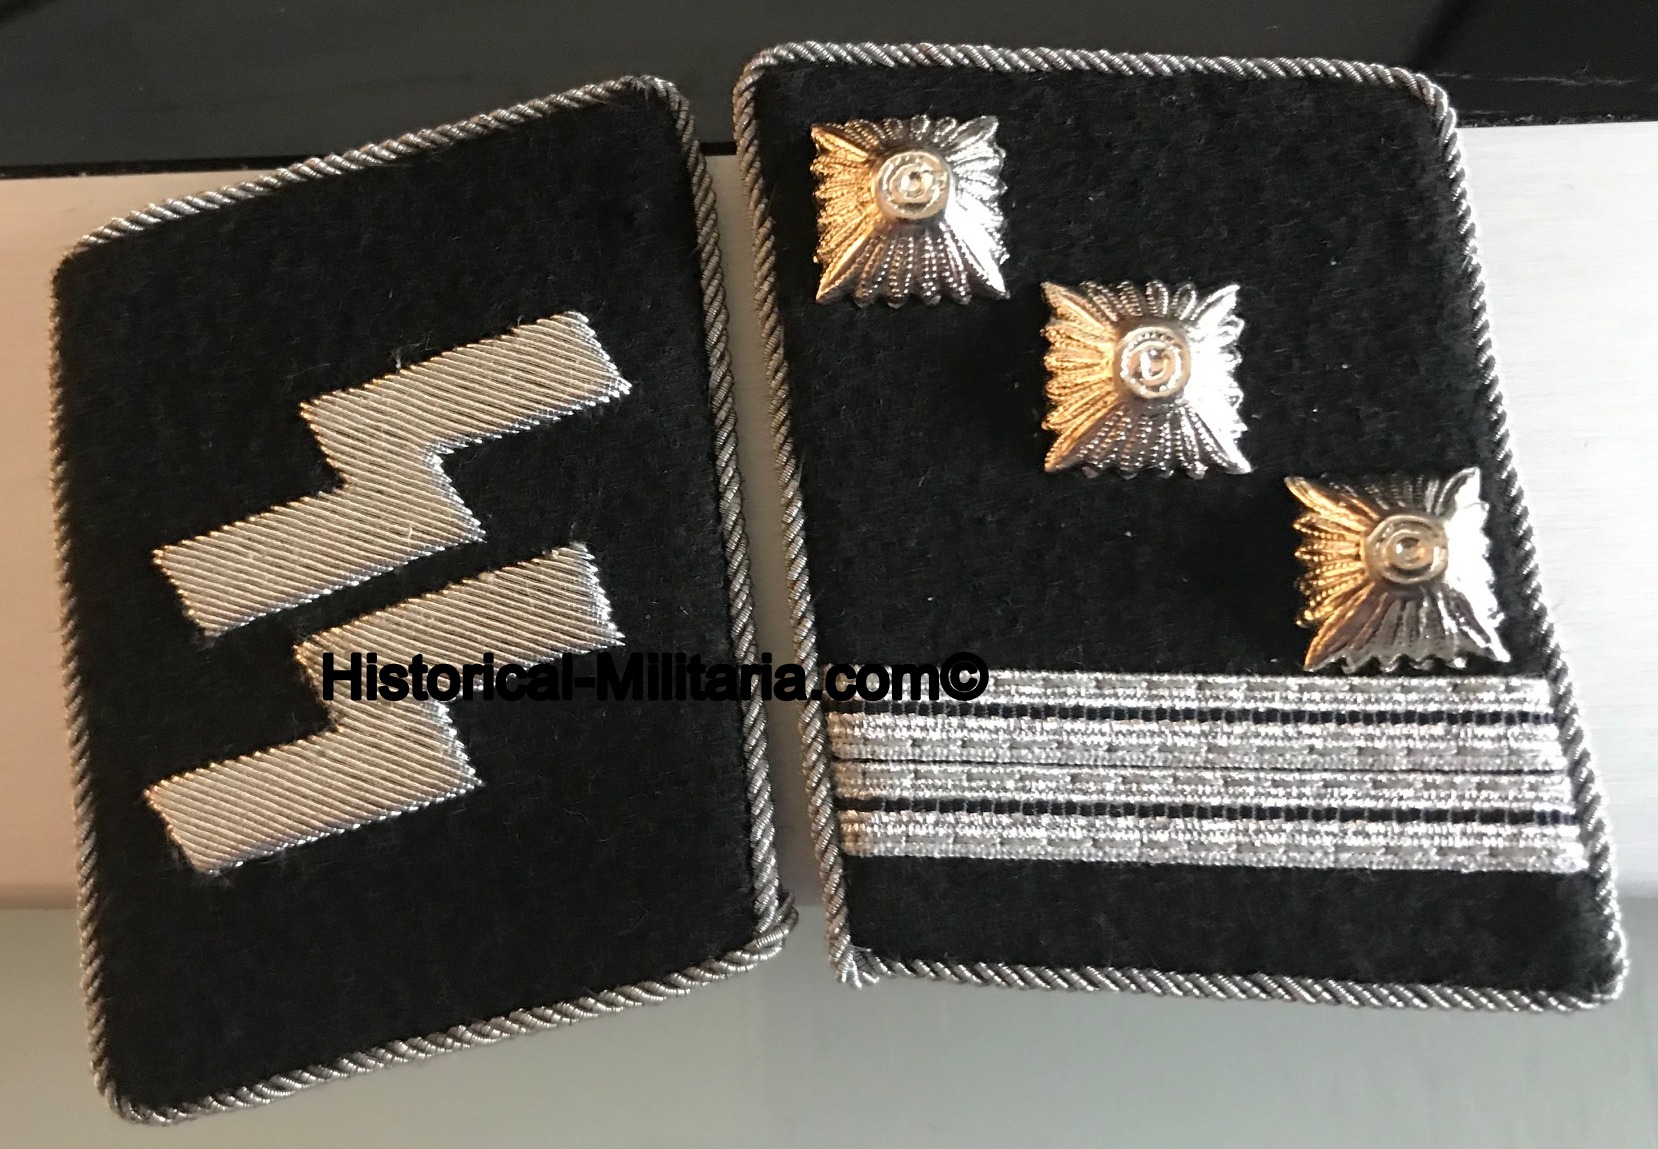 Waffen-SS Panzer SS-Hauptsturmführer SET Schulterklappen +Kragenspiegel Hptstuf - Waffen-SS Panzer Tank Troops Captain SET - SET da Capitano delle truppe corazzate Waffen-SS